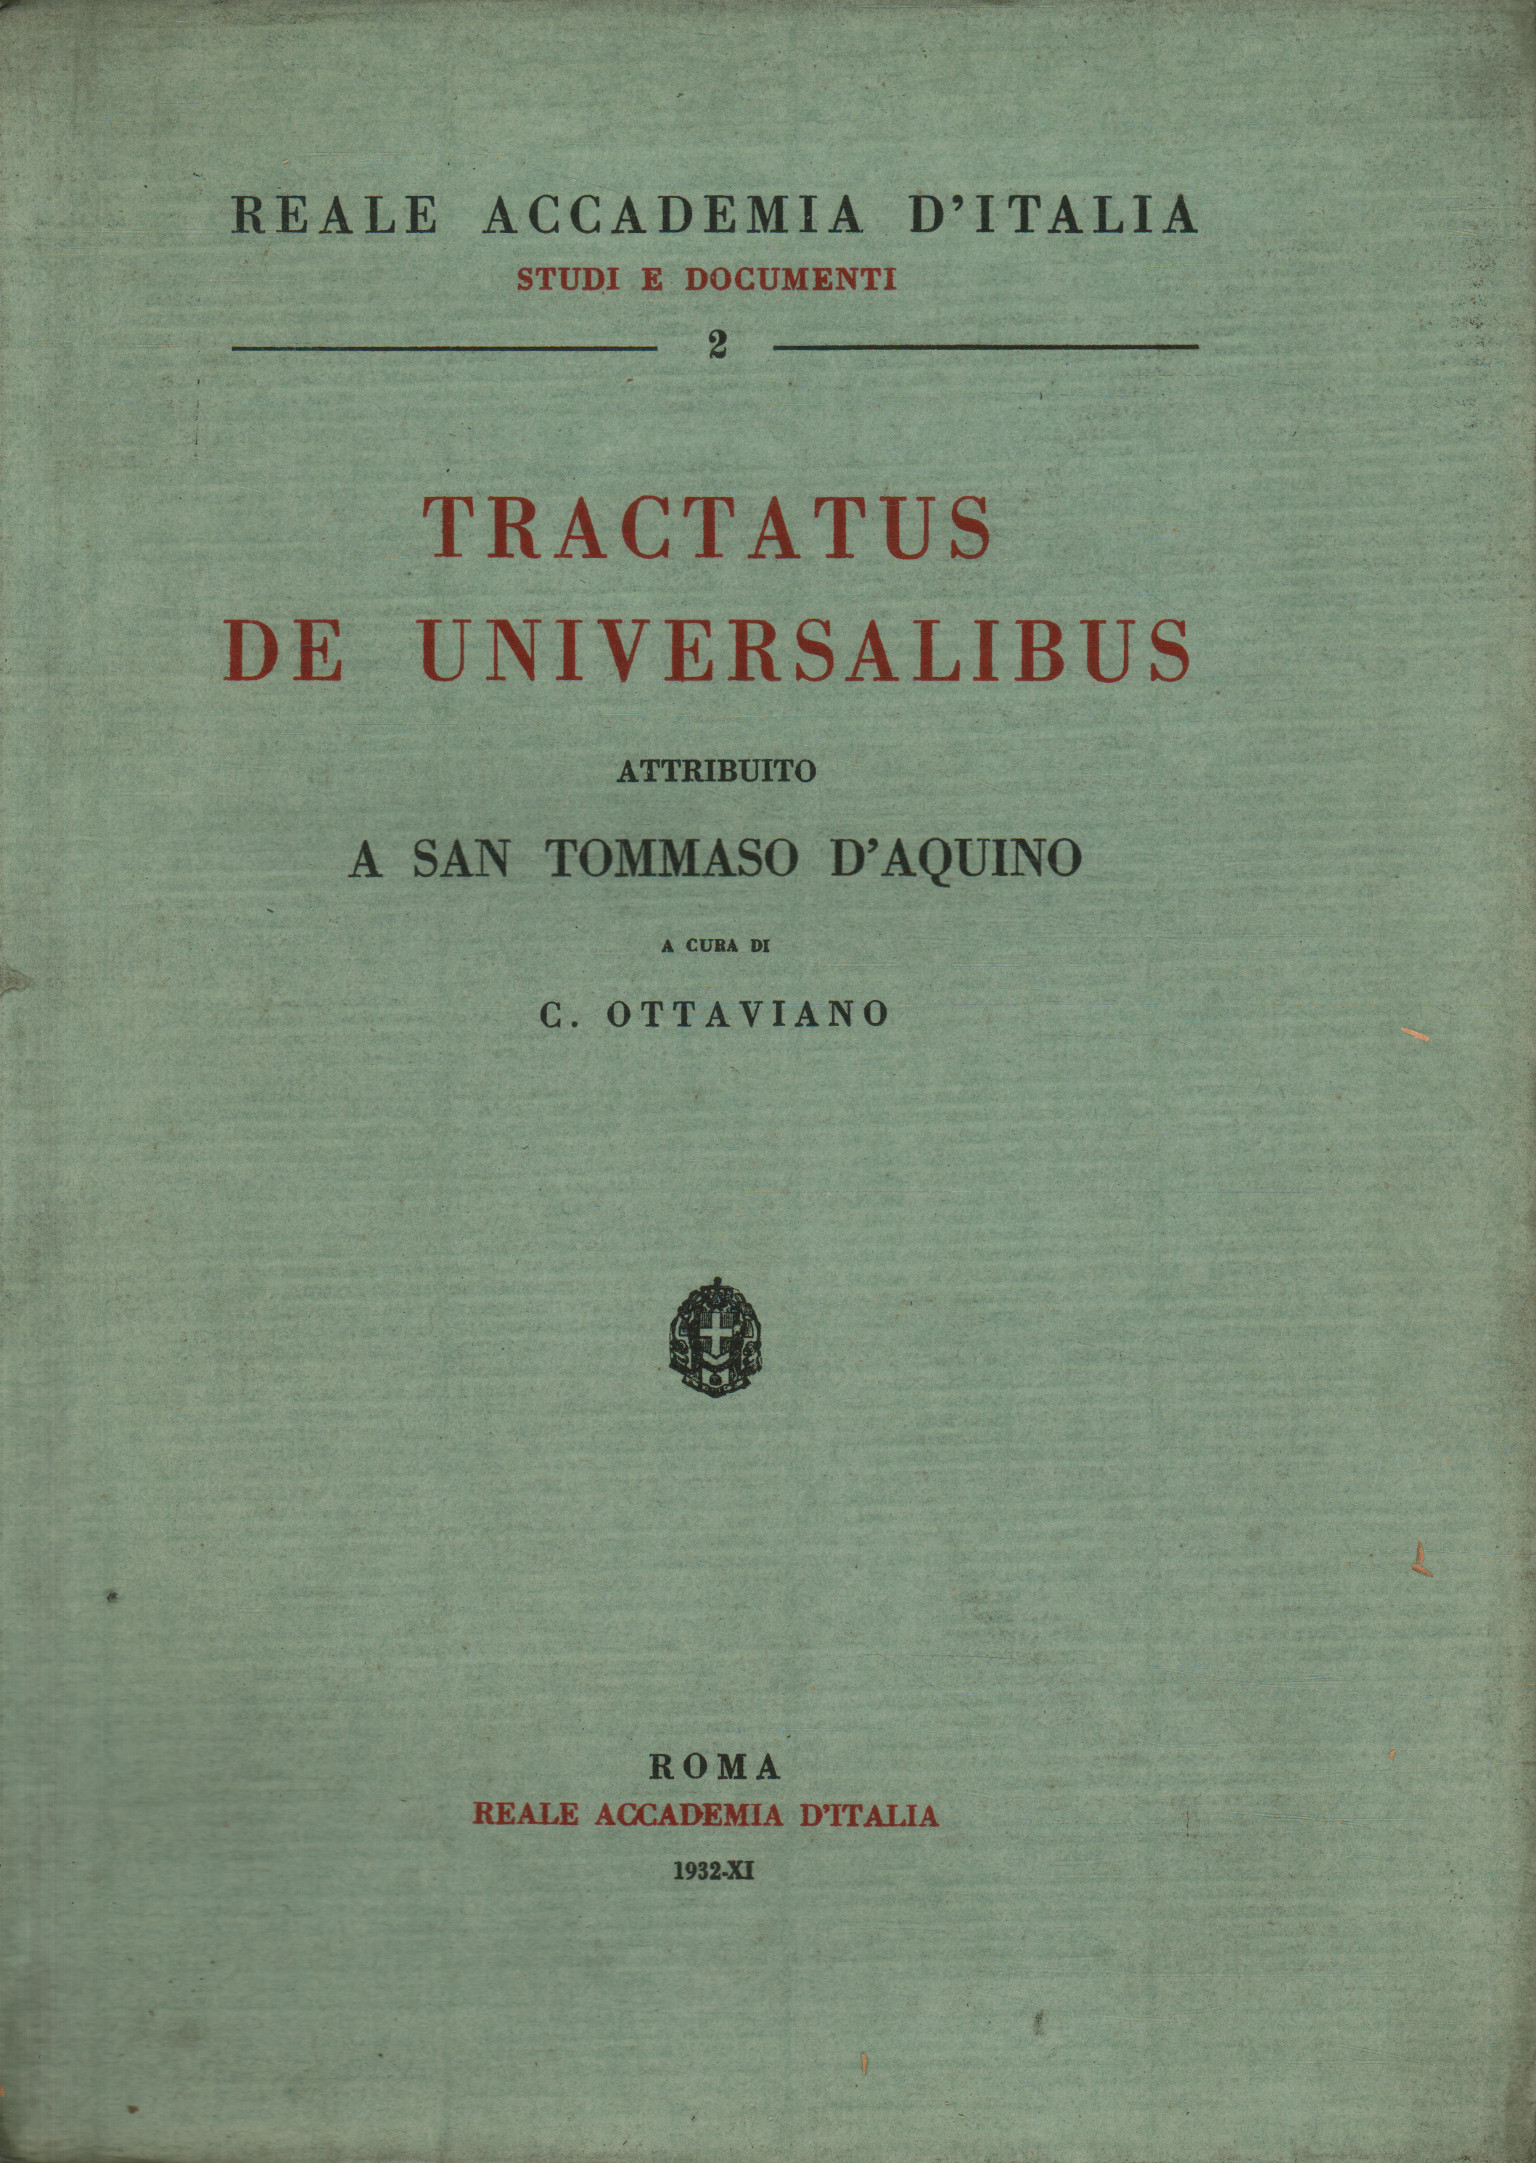 Tractatus de Universalibus atribuido a